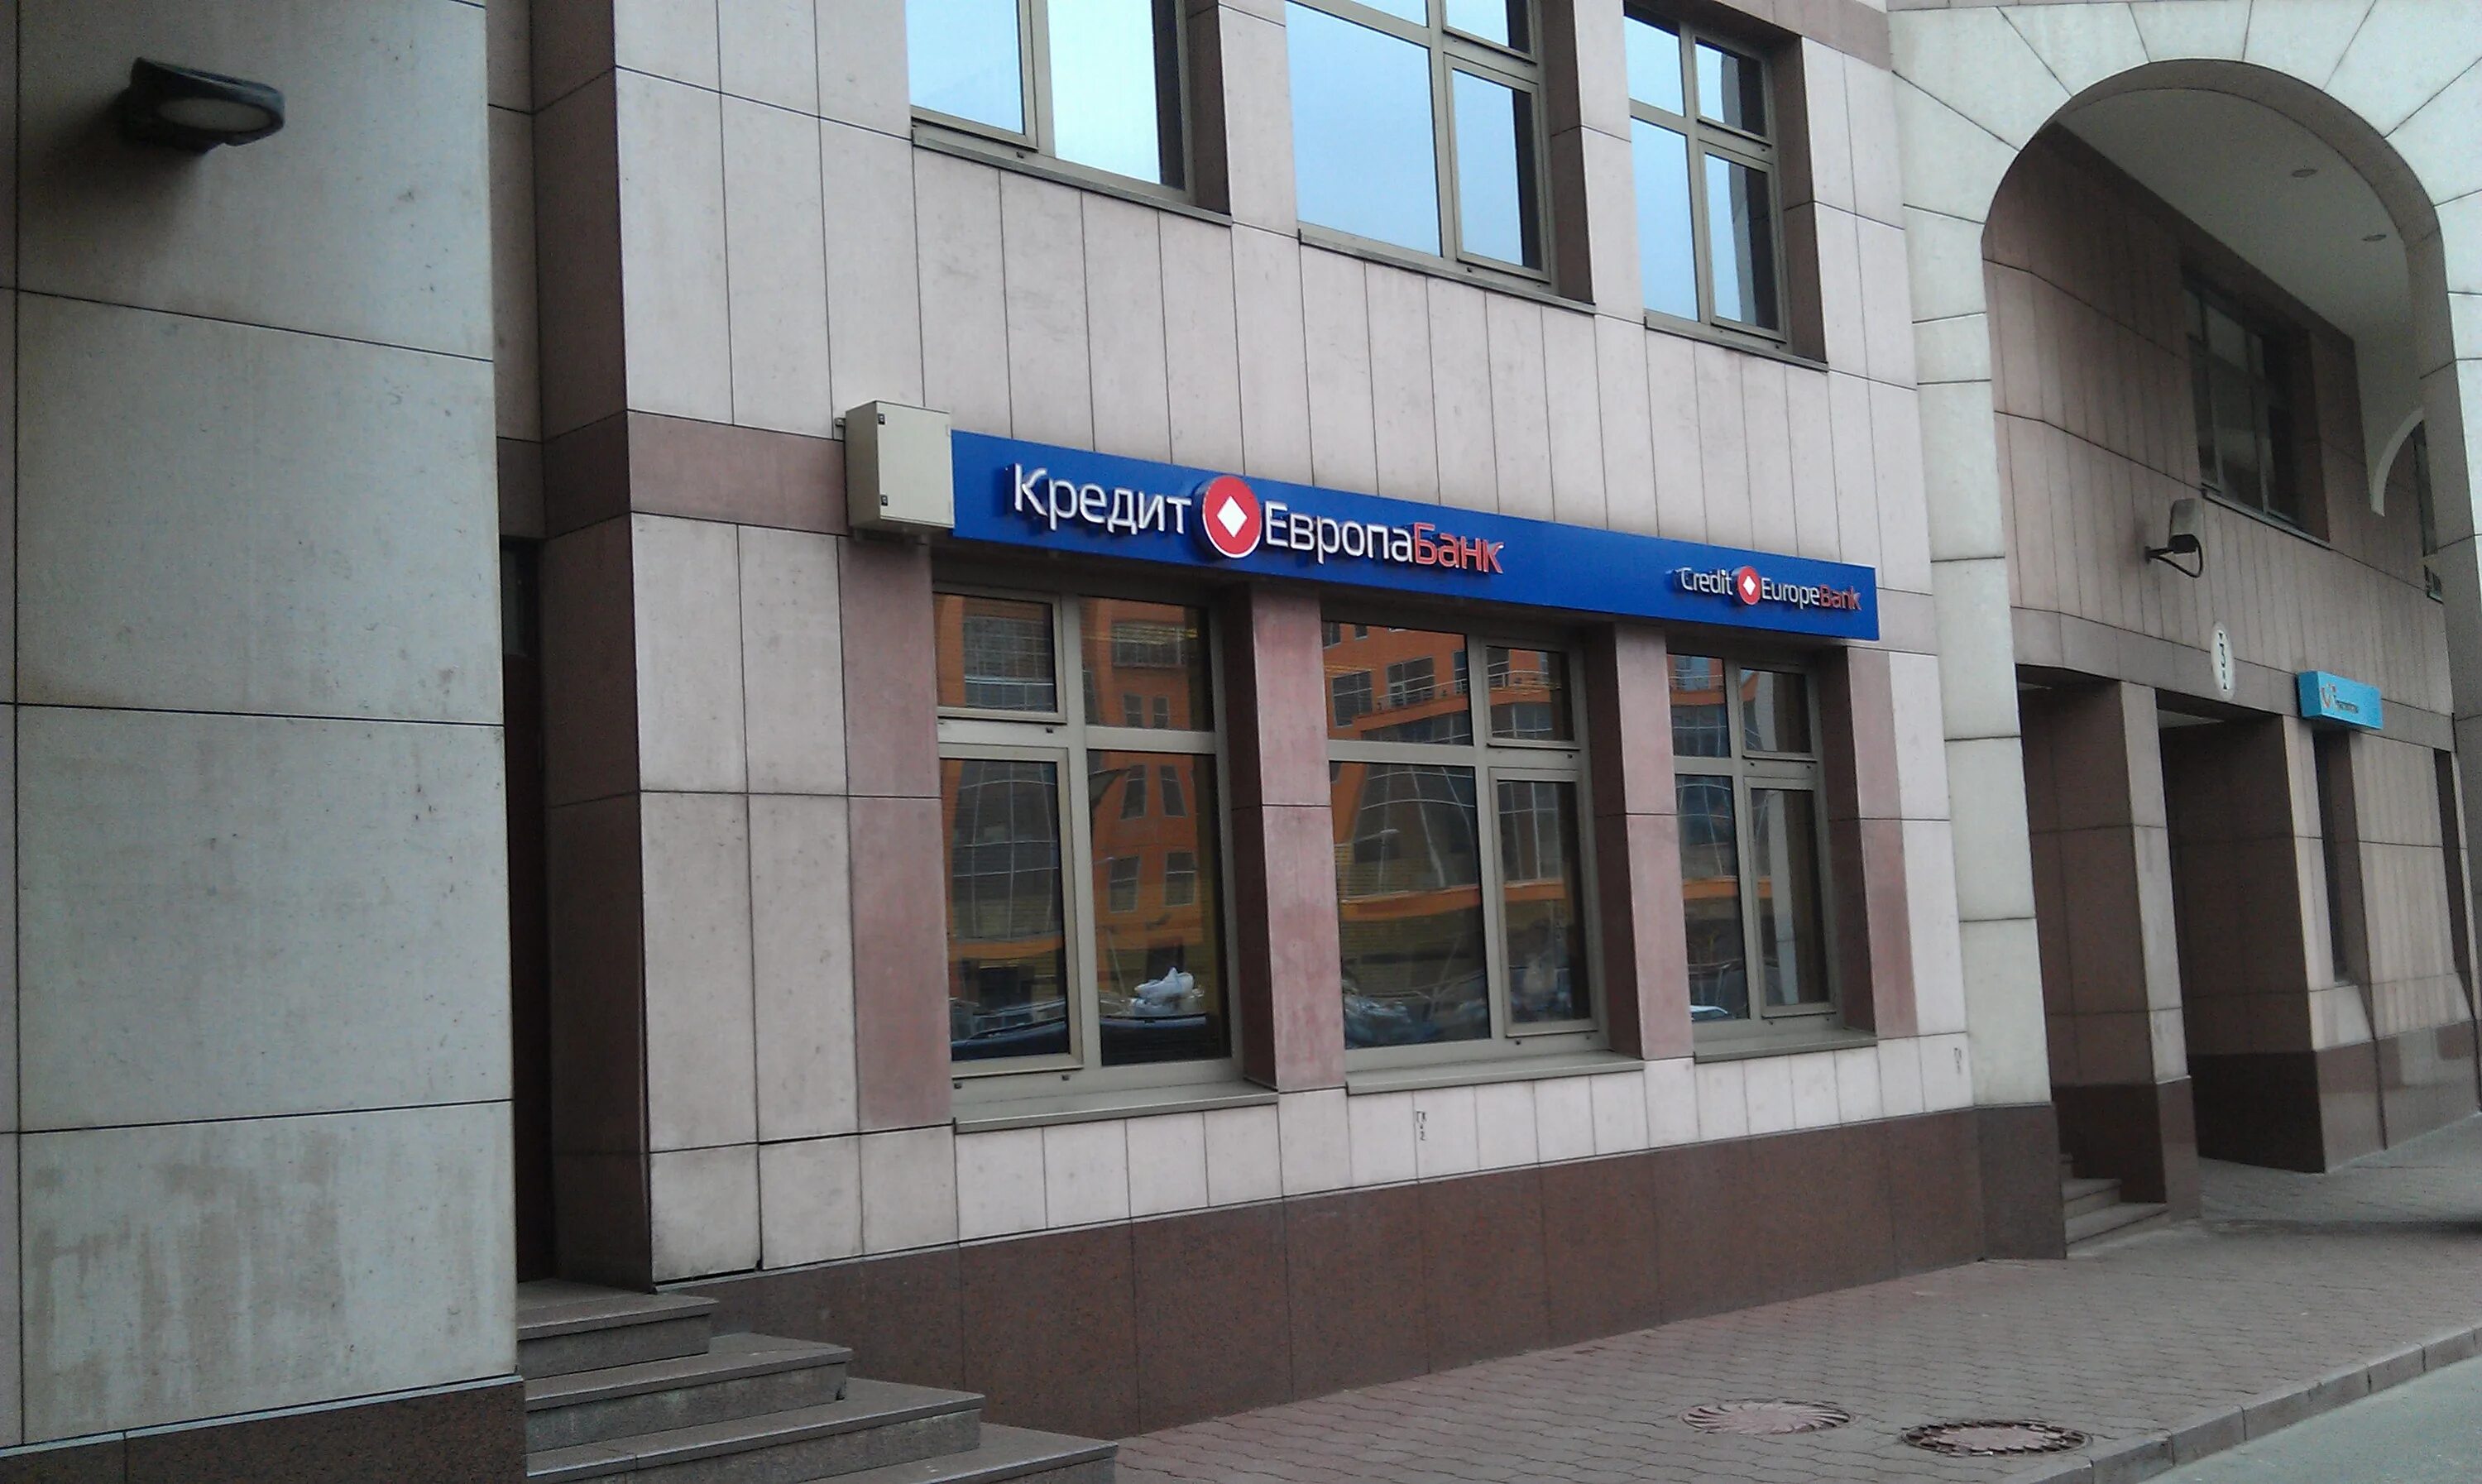 Европа банк. Банк Новосибирск. Кредит Европа банк фото. Отделение банка кредит Европа.